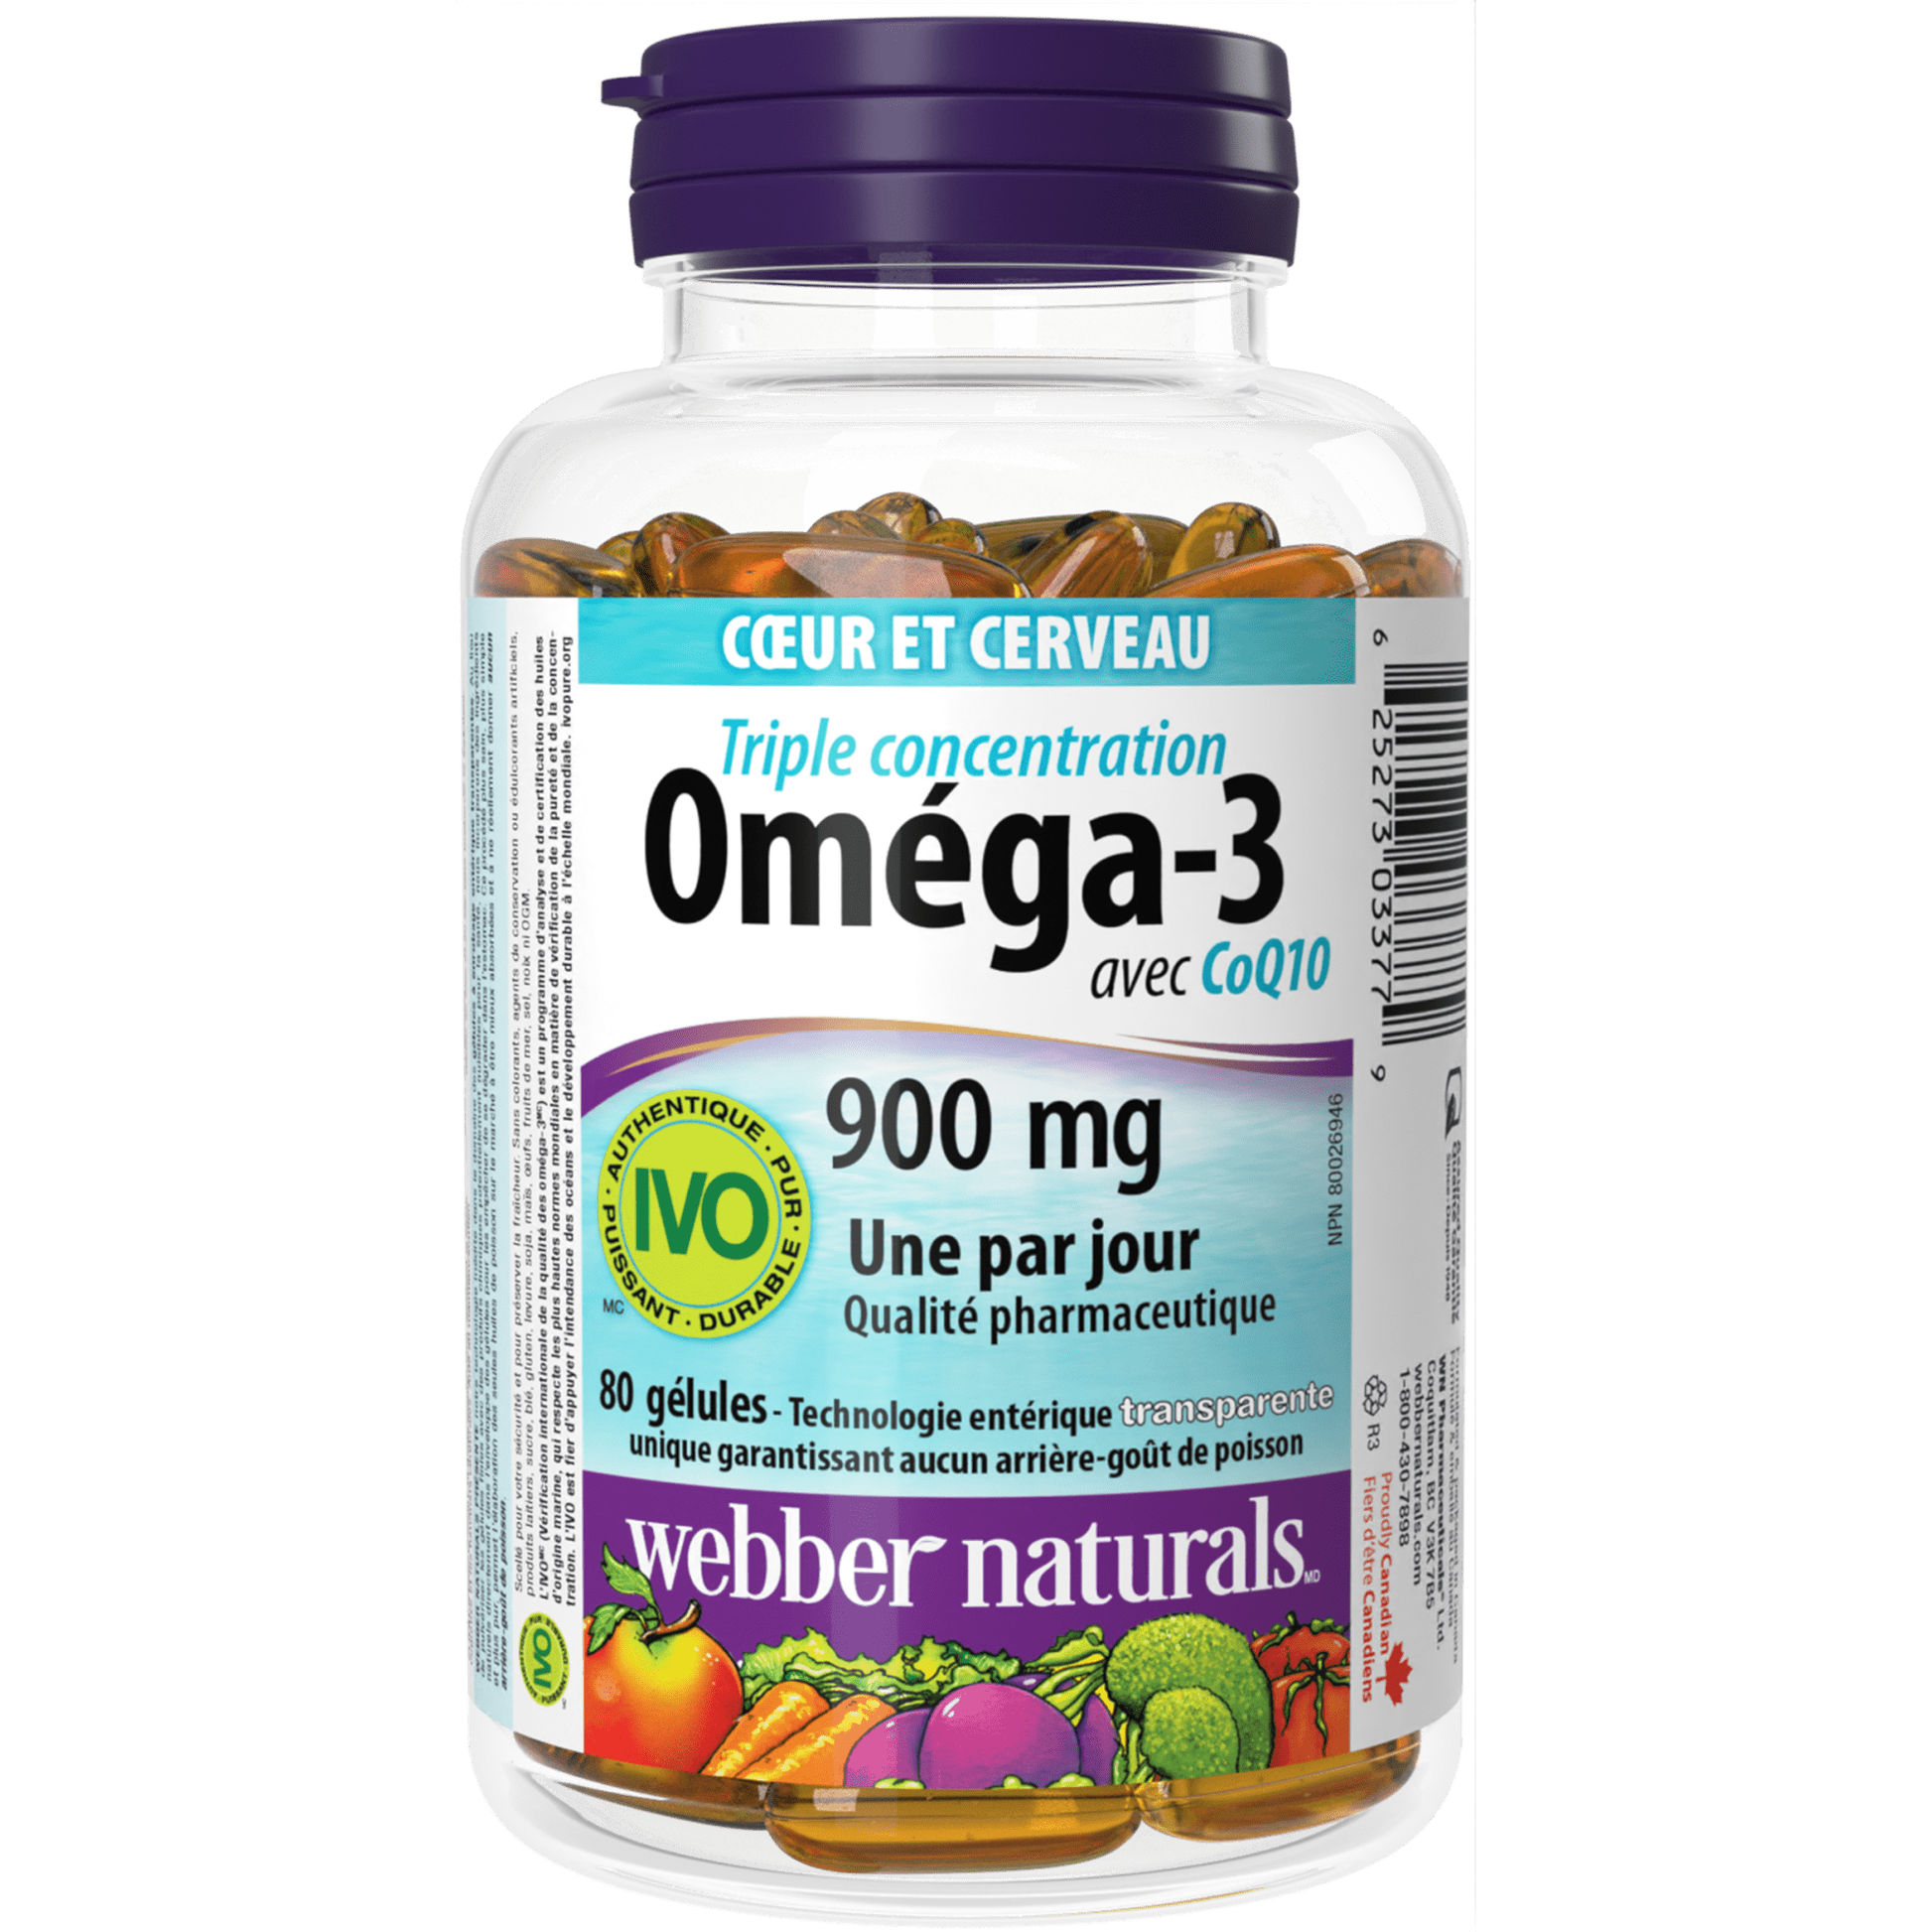 Oméga-3 Triple concentration avec CoQ10 900 mg AEP/ADH for Webber Naturals|v|hi-res|WN3377